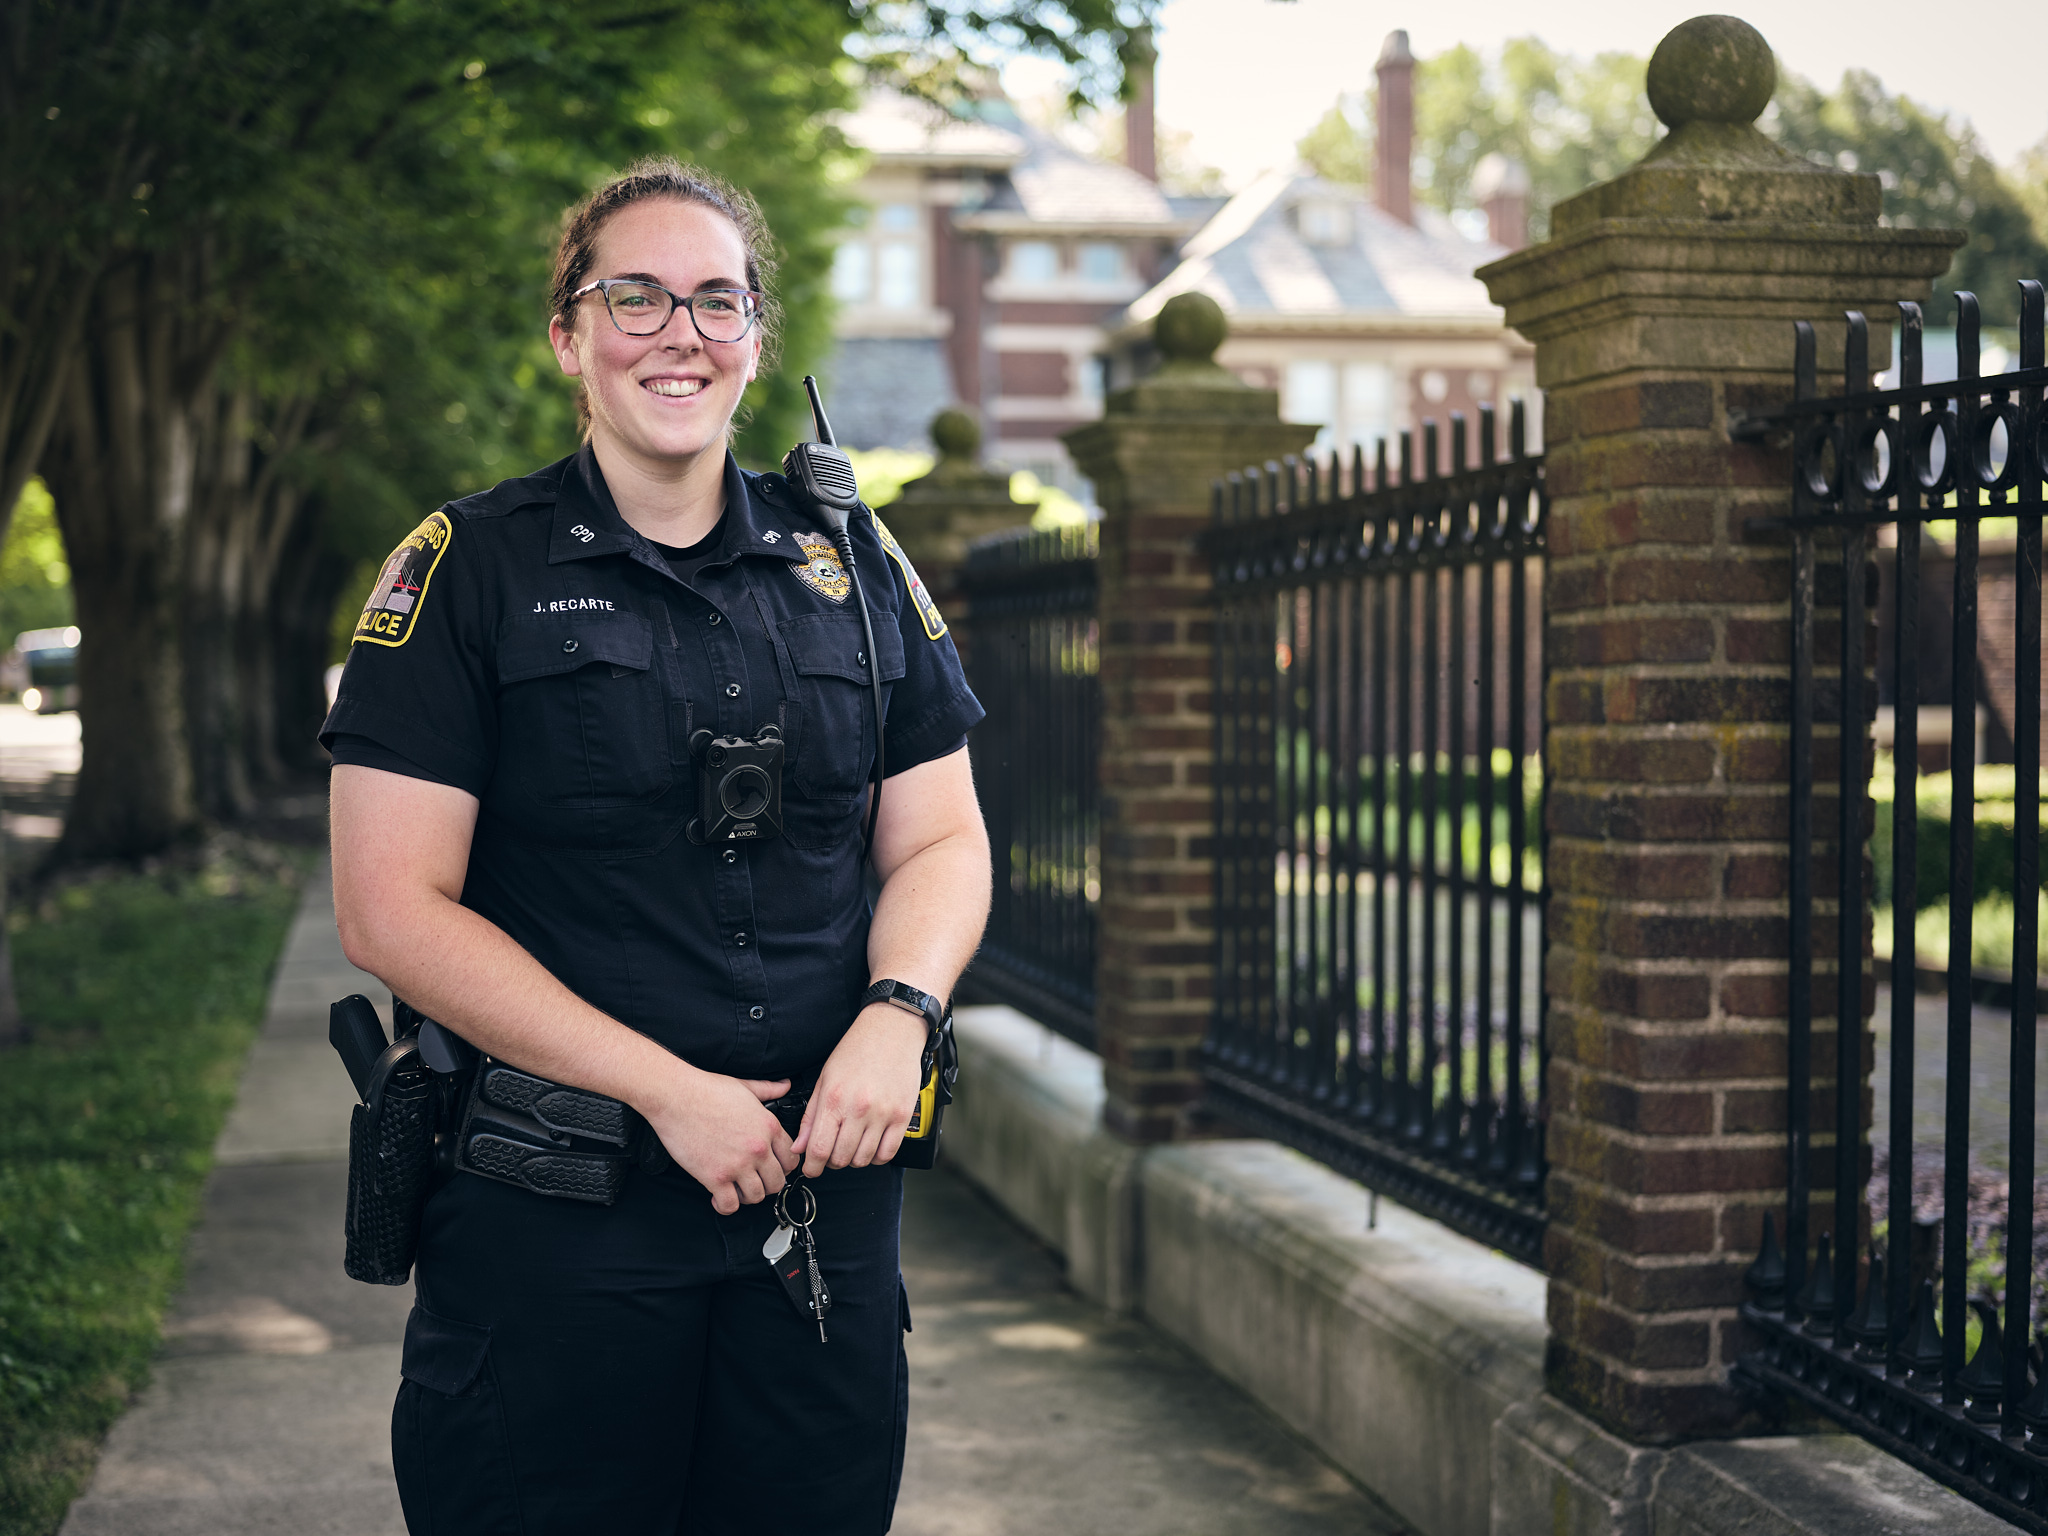 Columbus Police Department, IN Police Jobs